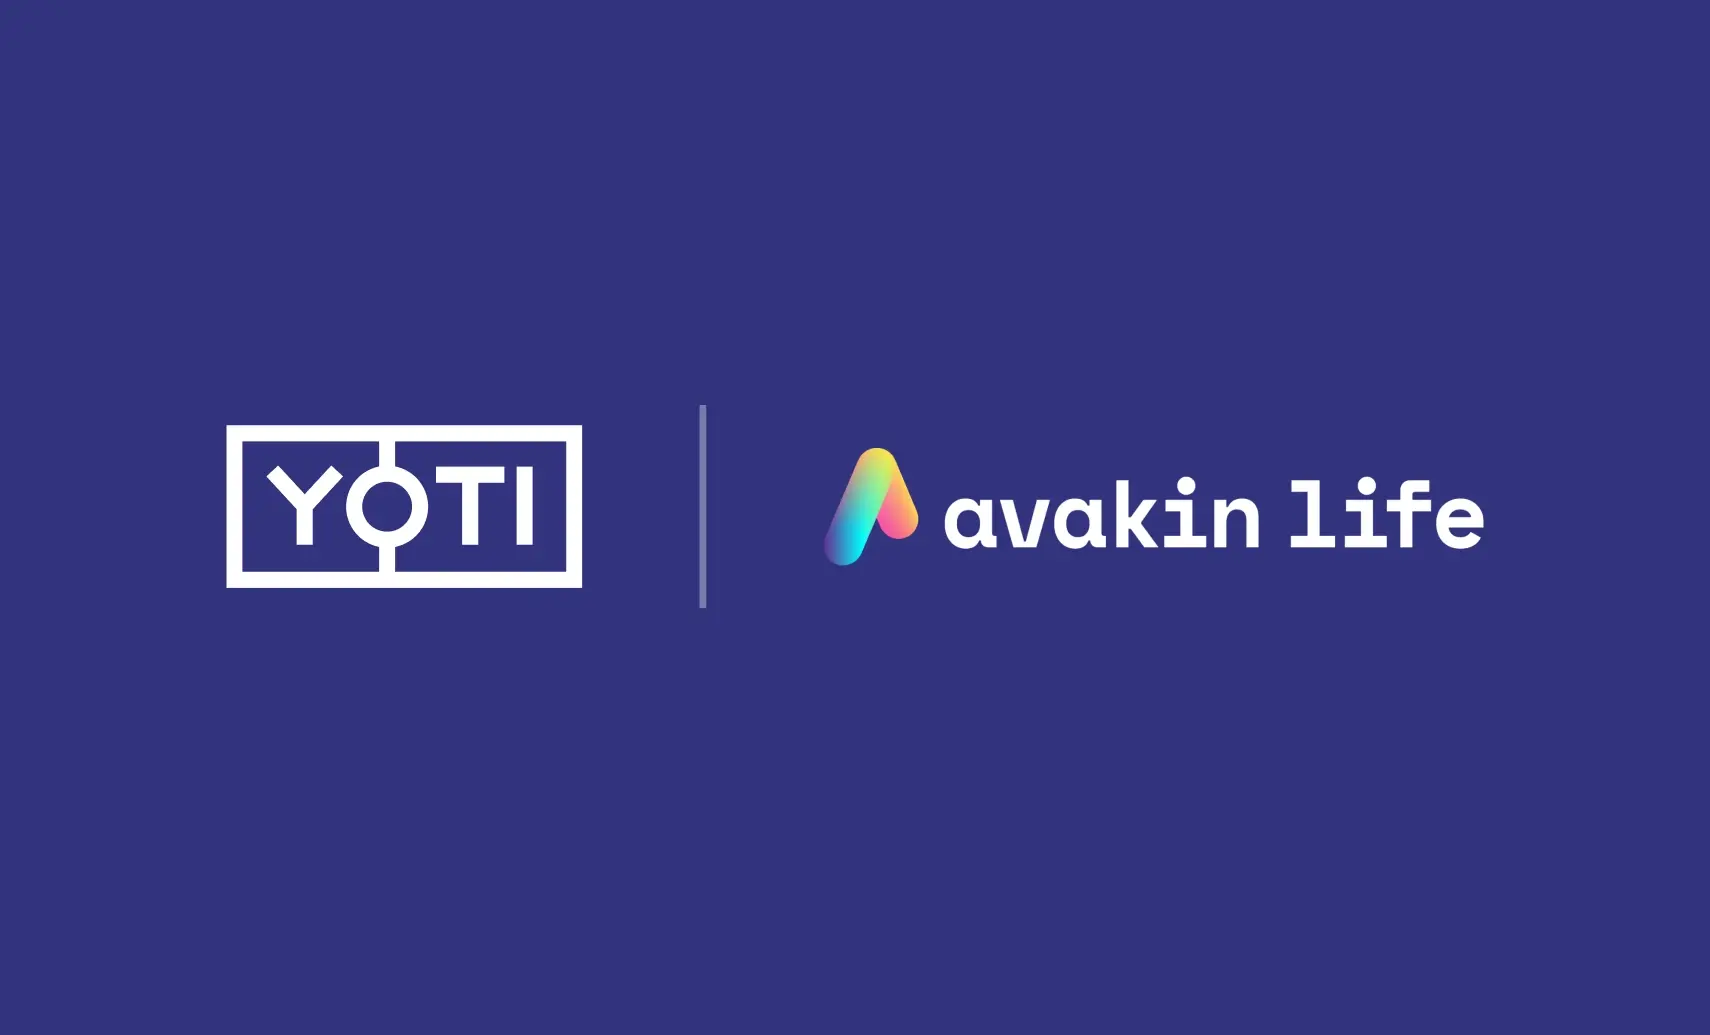 Yoti and Avakin Life logos presented together